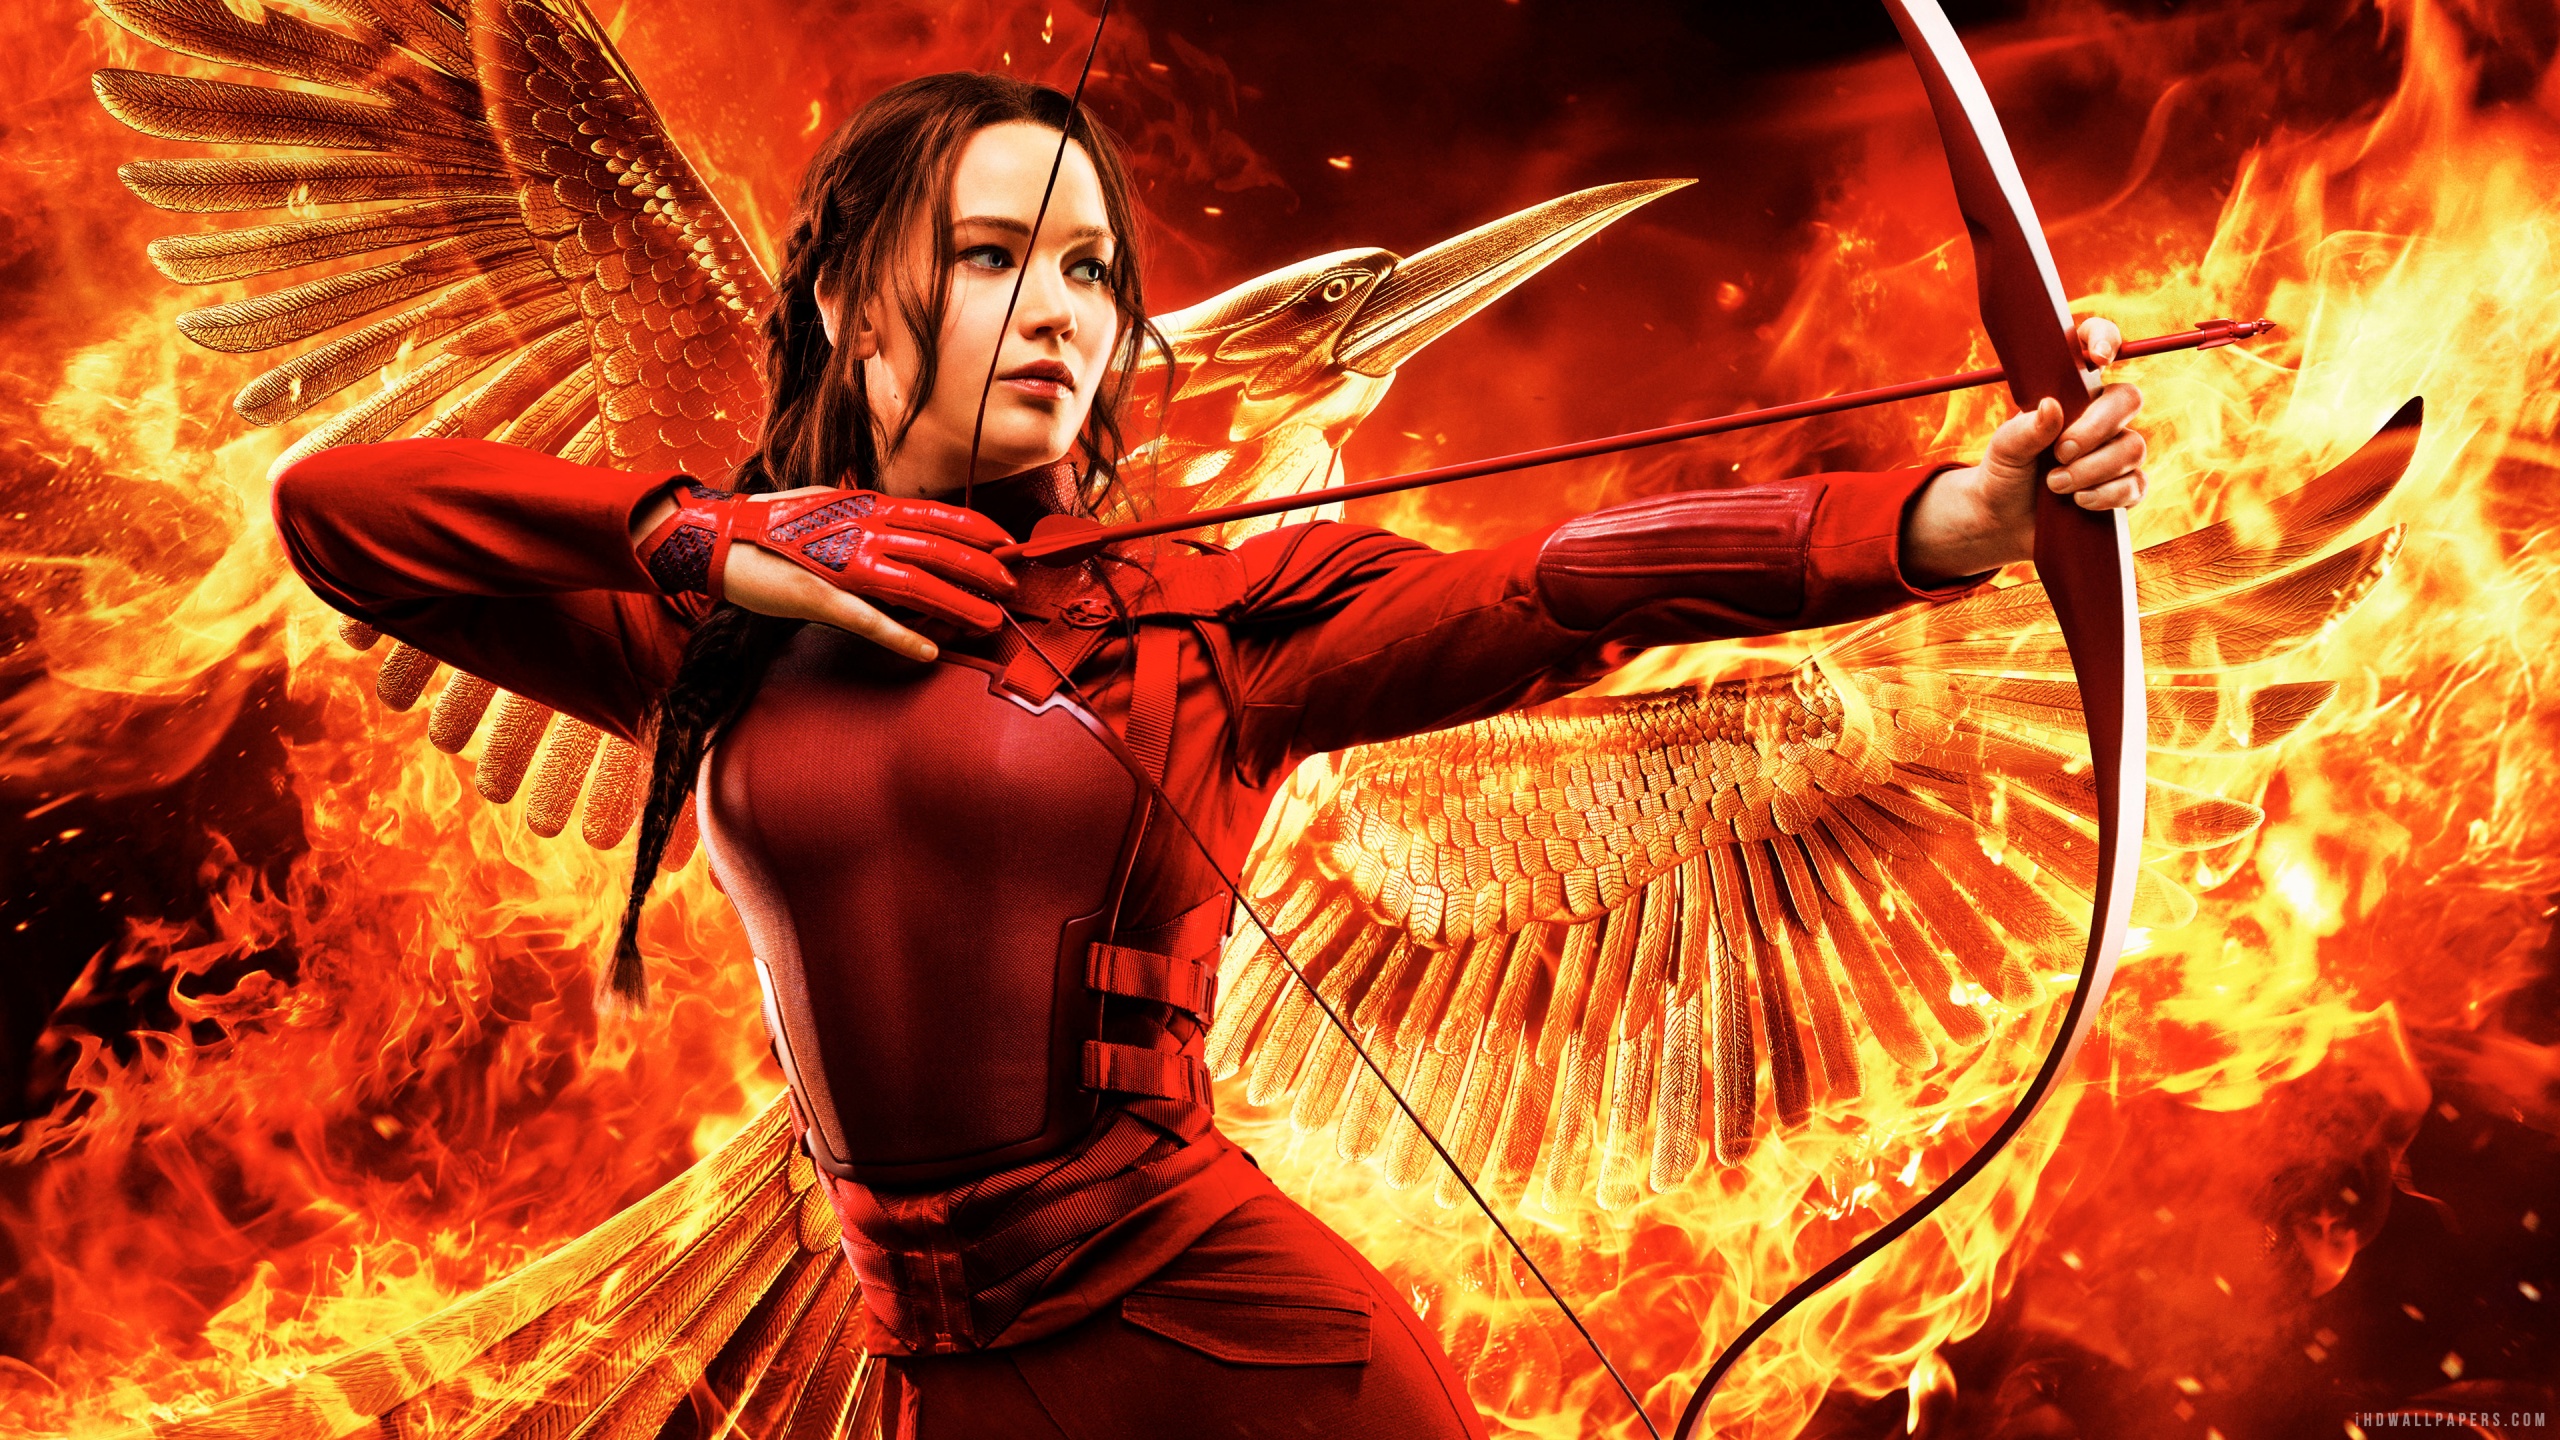  The Hunger Games Mockingjay Part 2 2015 HD Wallpaper   iHD Wallpapers